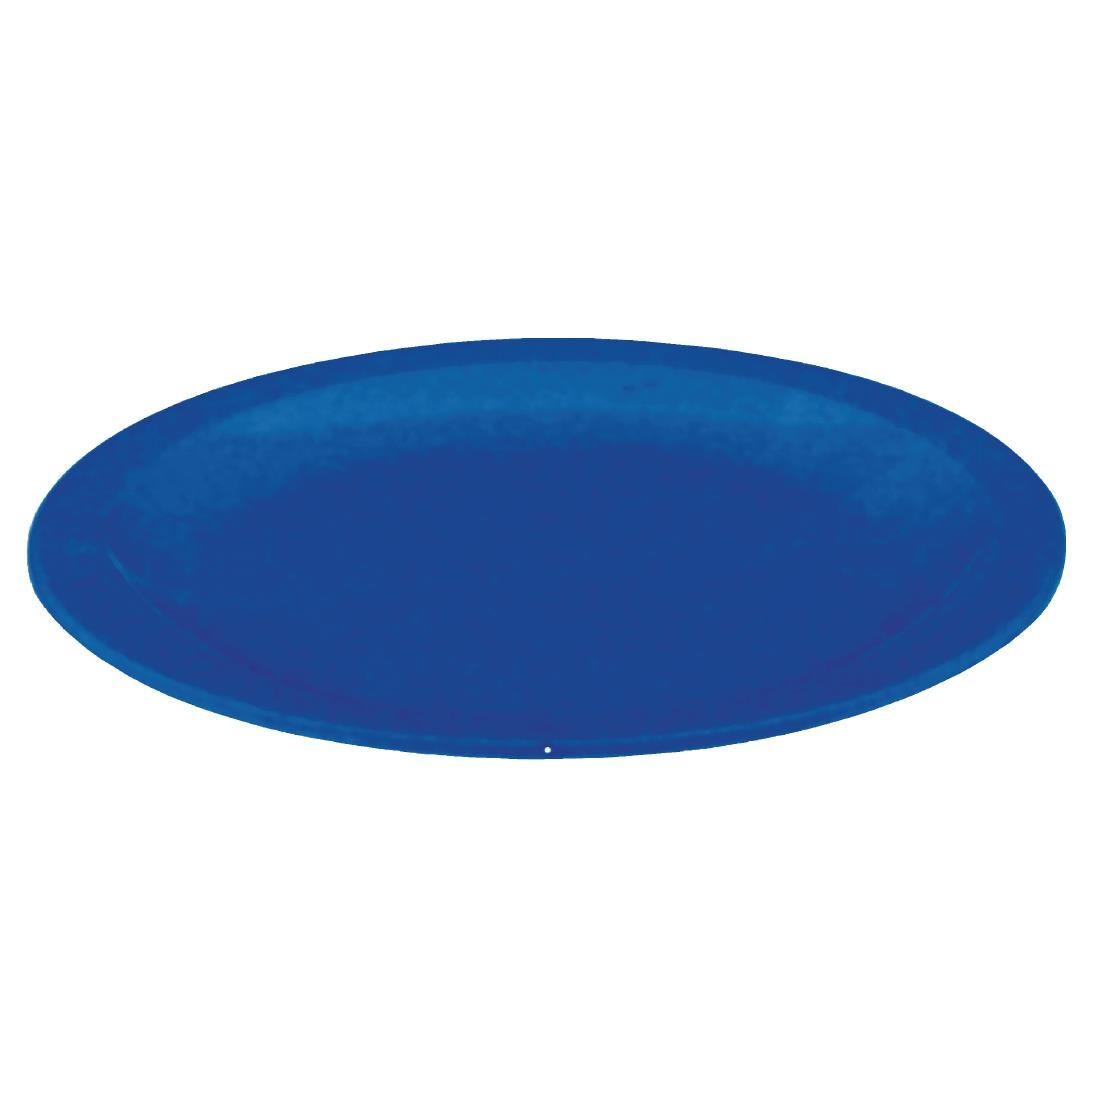 Plate - Blue